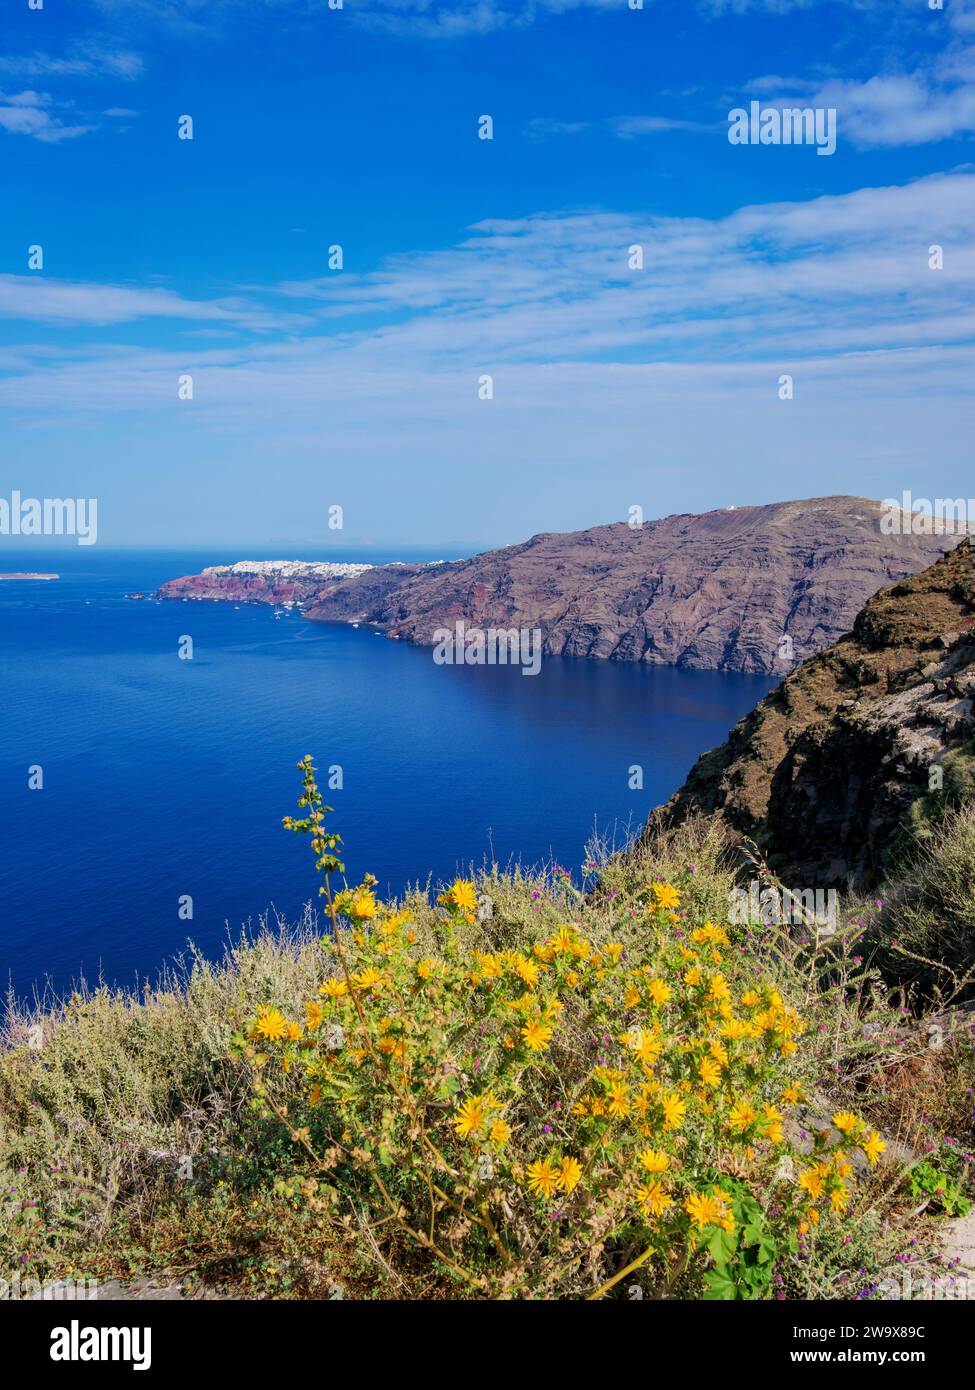 View over caldera towards the Oia Village, Santorini or Thira Island, Cyclades, Greece Stock Photo